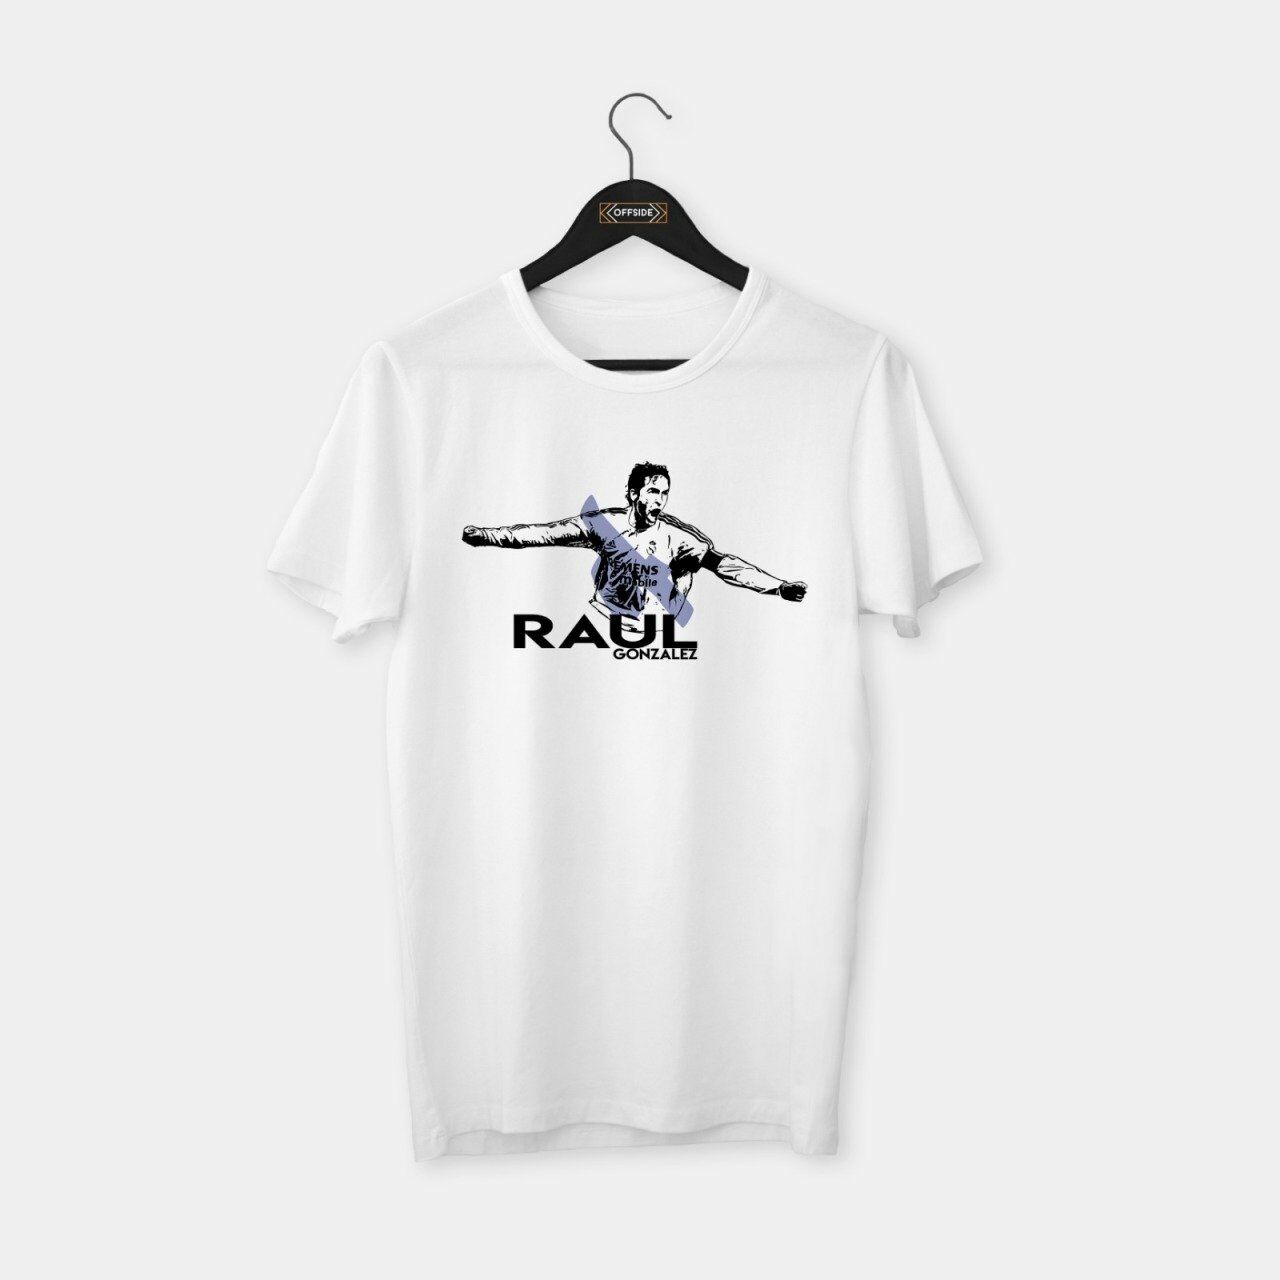 Raul II T-shirt